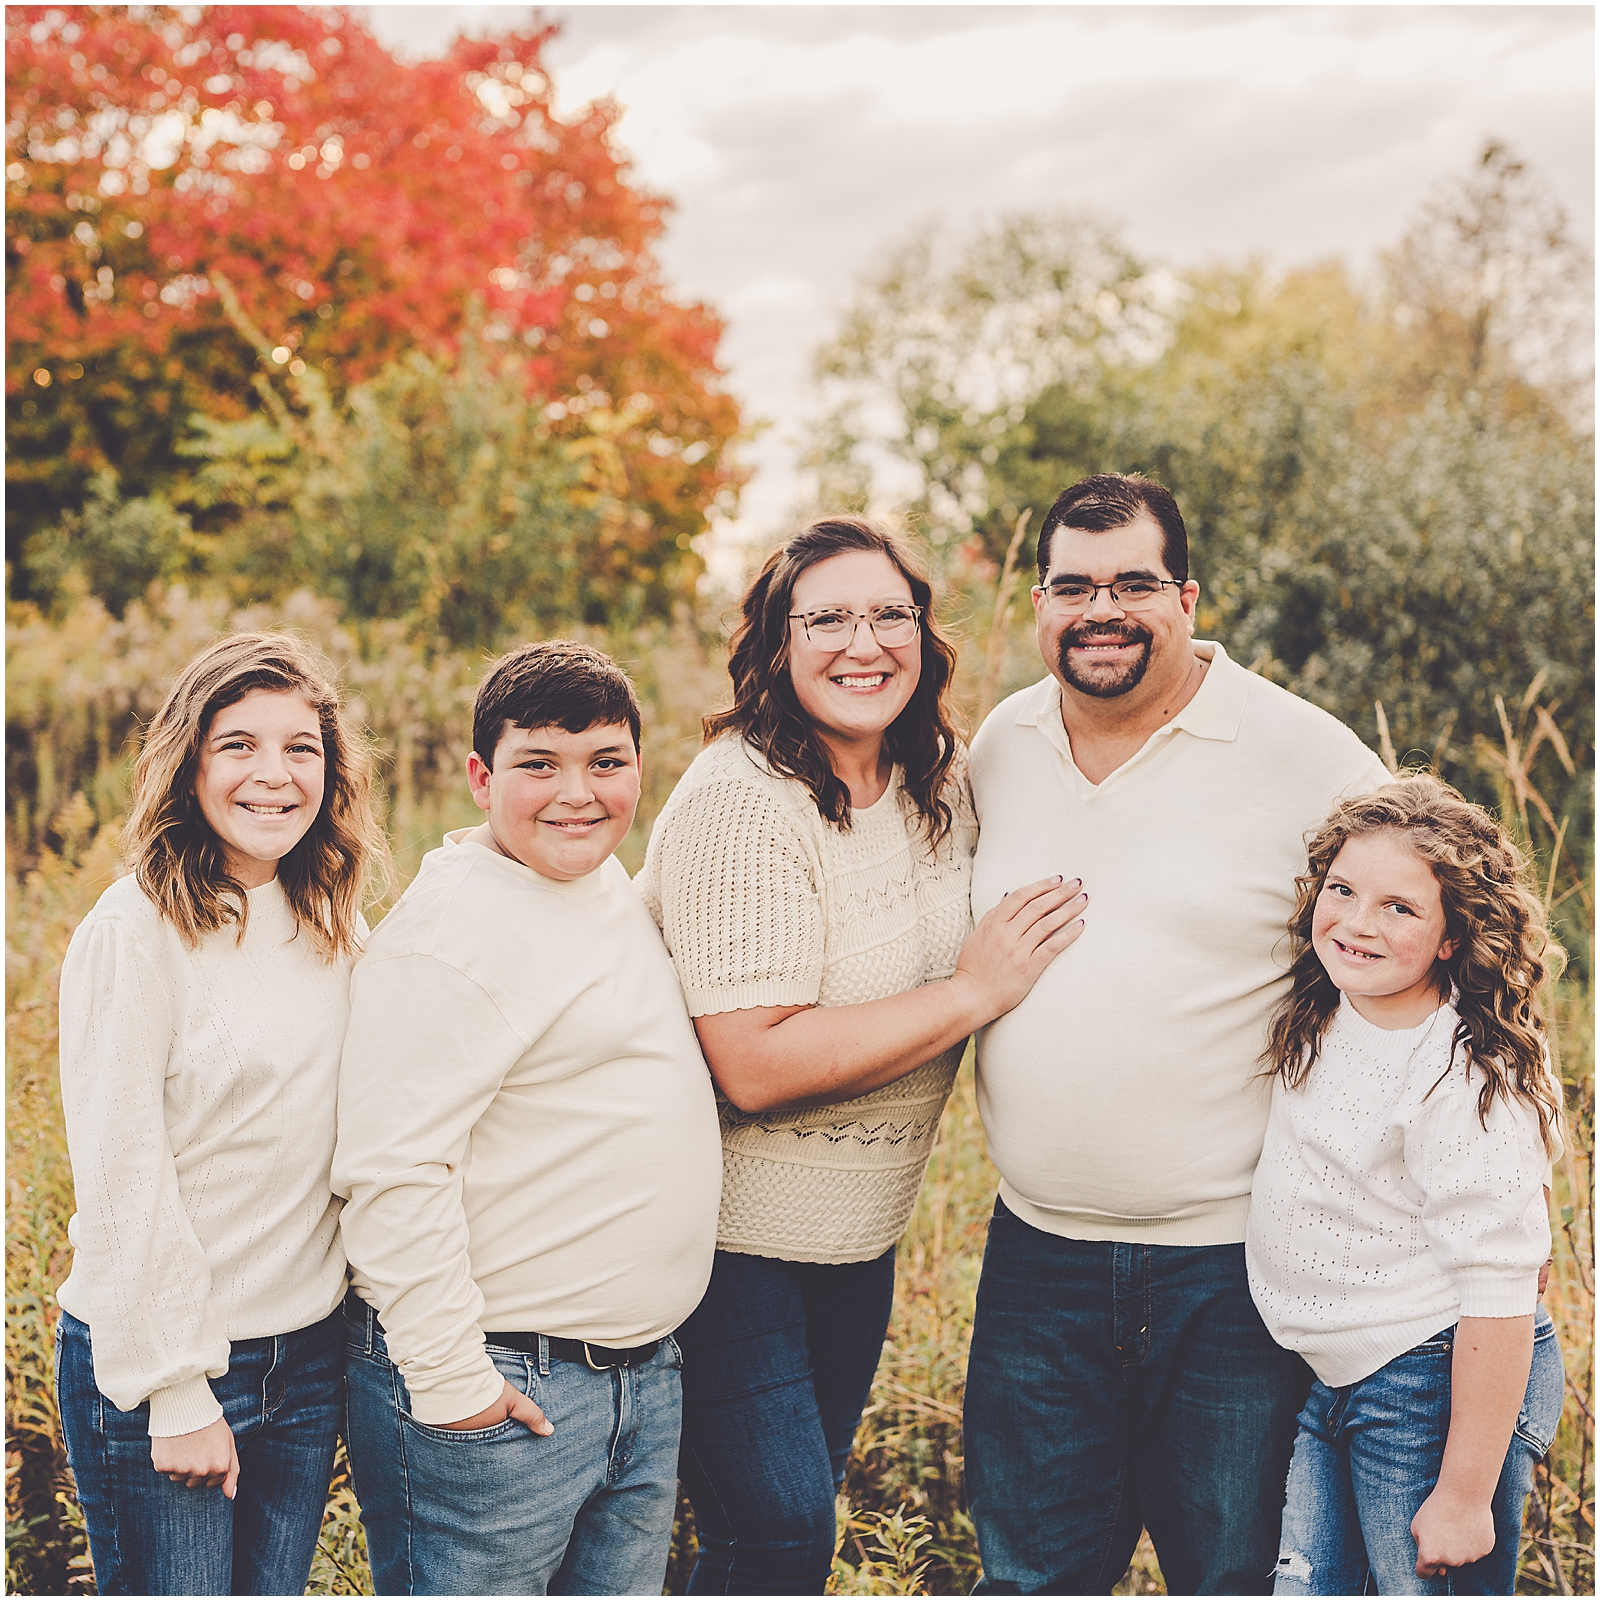 Fall Bourbonnais family photographer for the Rasmussen family with Kankakee County & Bourbonnais family photographer Kara Evans Photographer.